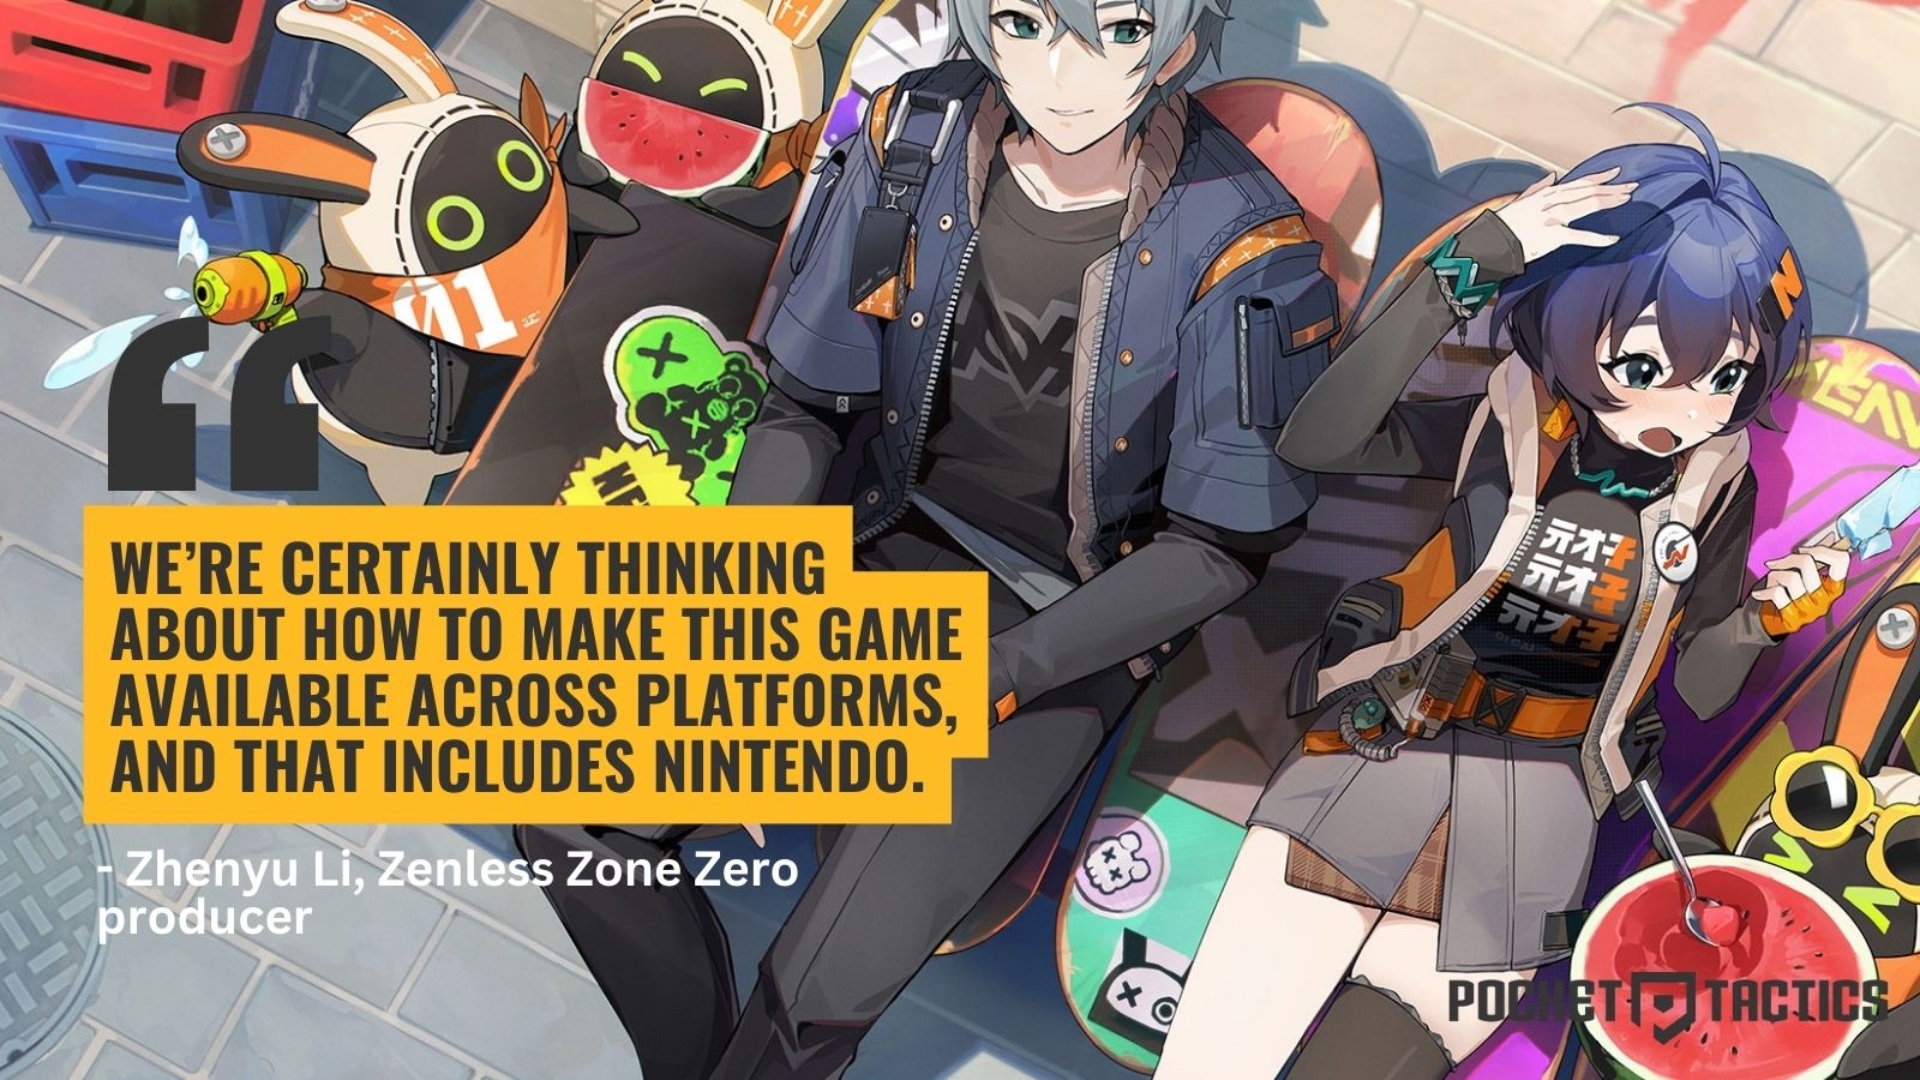 Zenless Zone Zero Has Received Over 10 Million Pre-Registration :  r/gachagaming